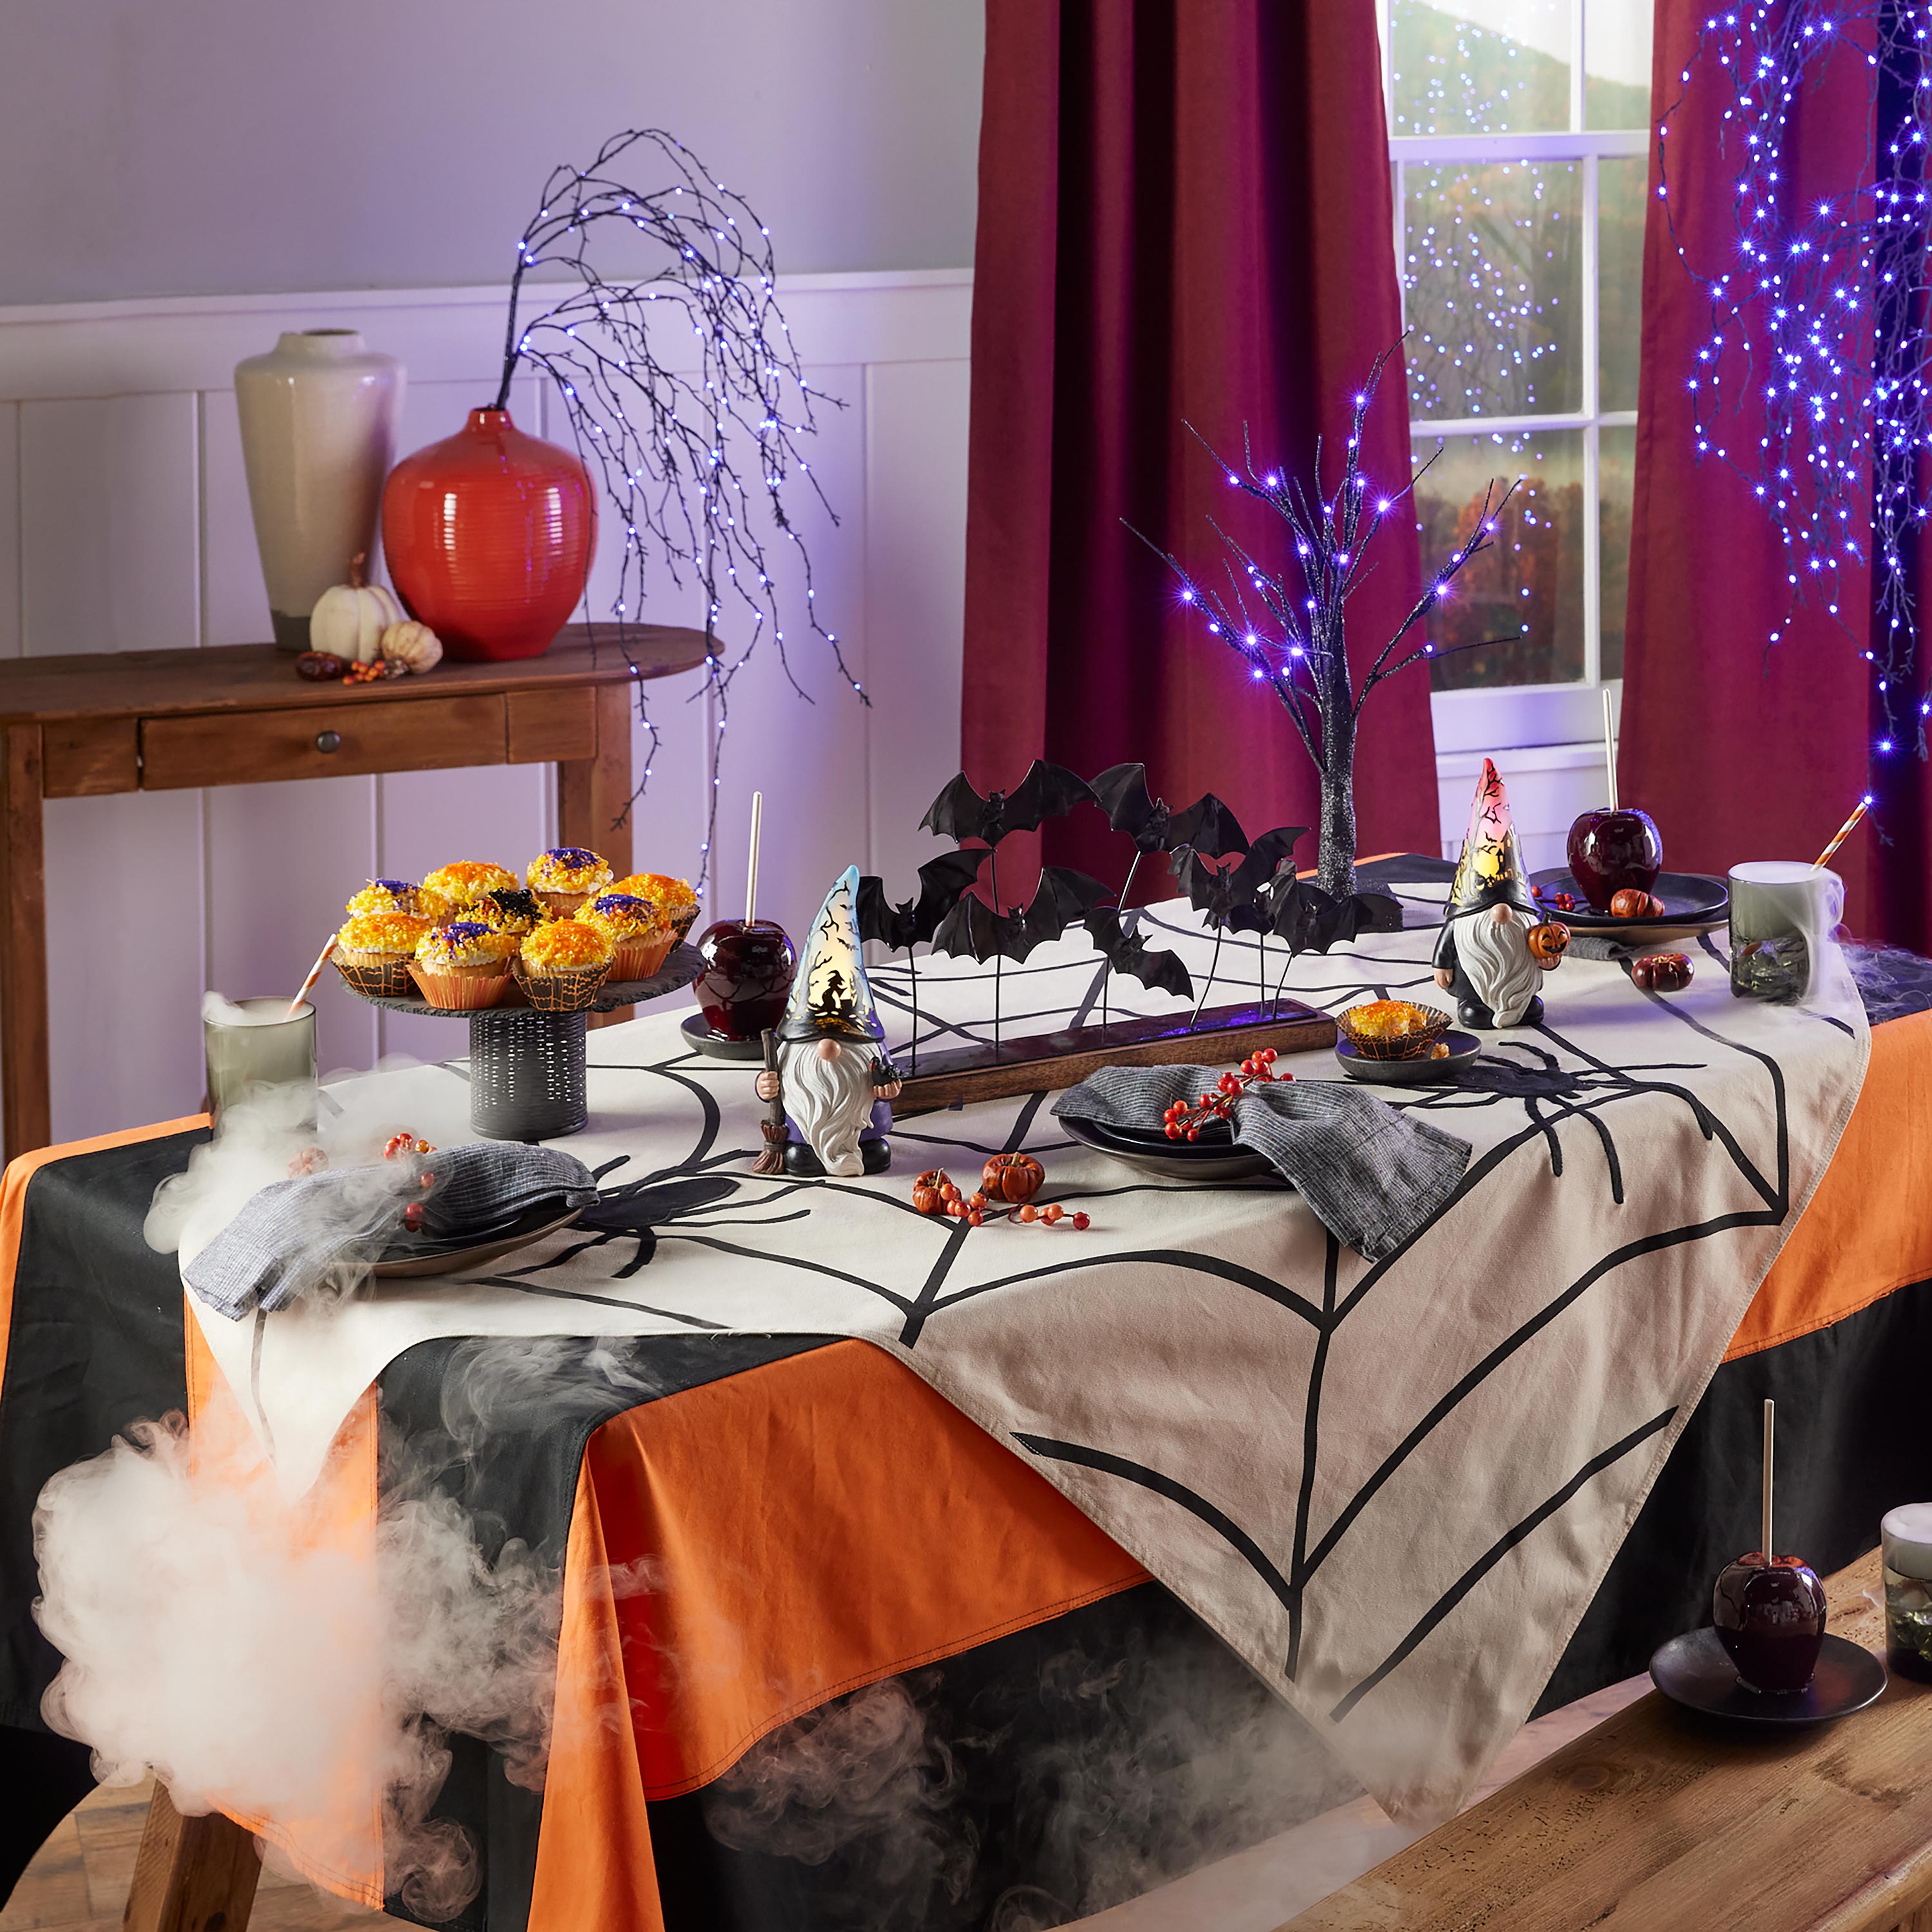 Halloween Spooky Spiderweb Table Throw